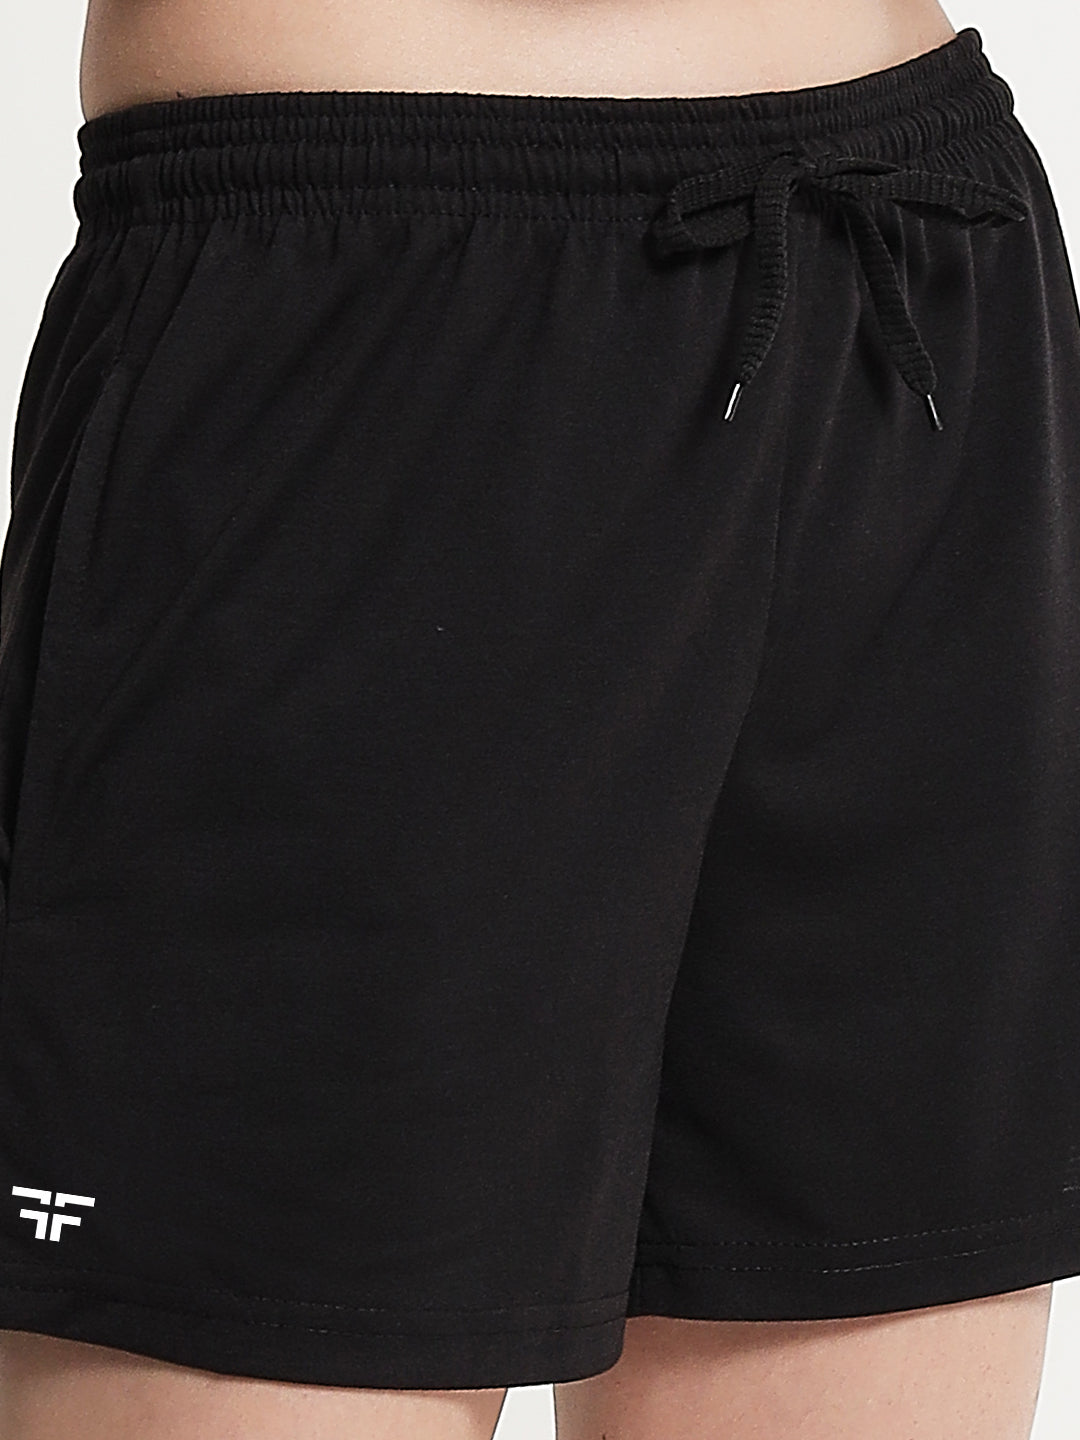 Black Color Solid Shorts